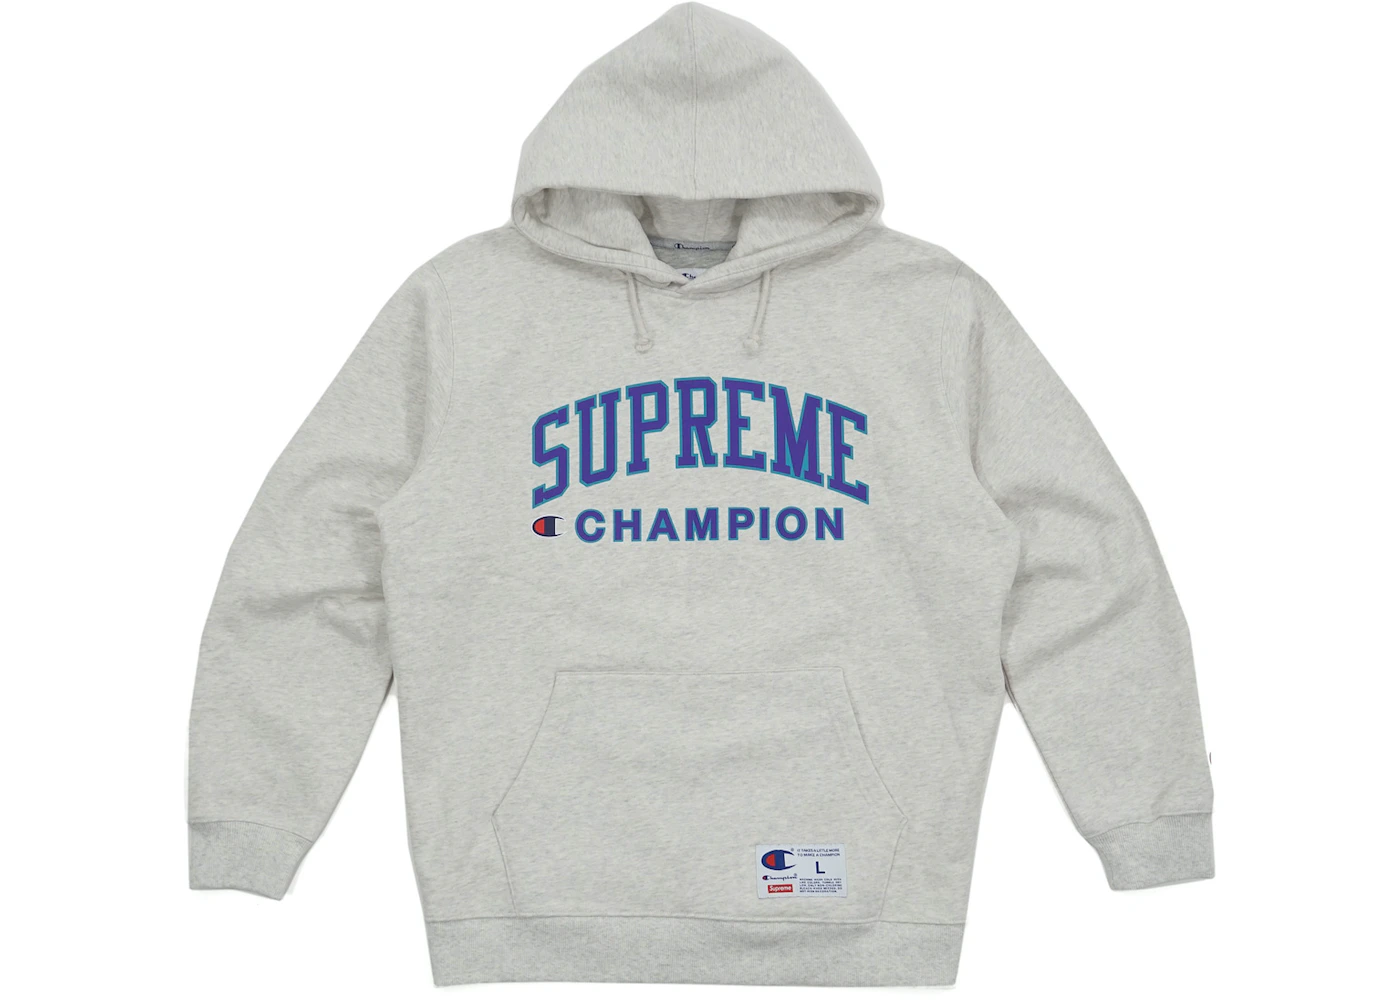 Supreme X Champion Hooded Sweatshirt Ash Grey - SS17 Men's - US